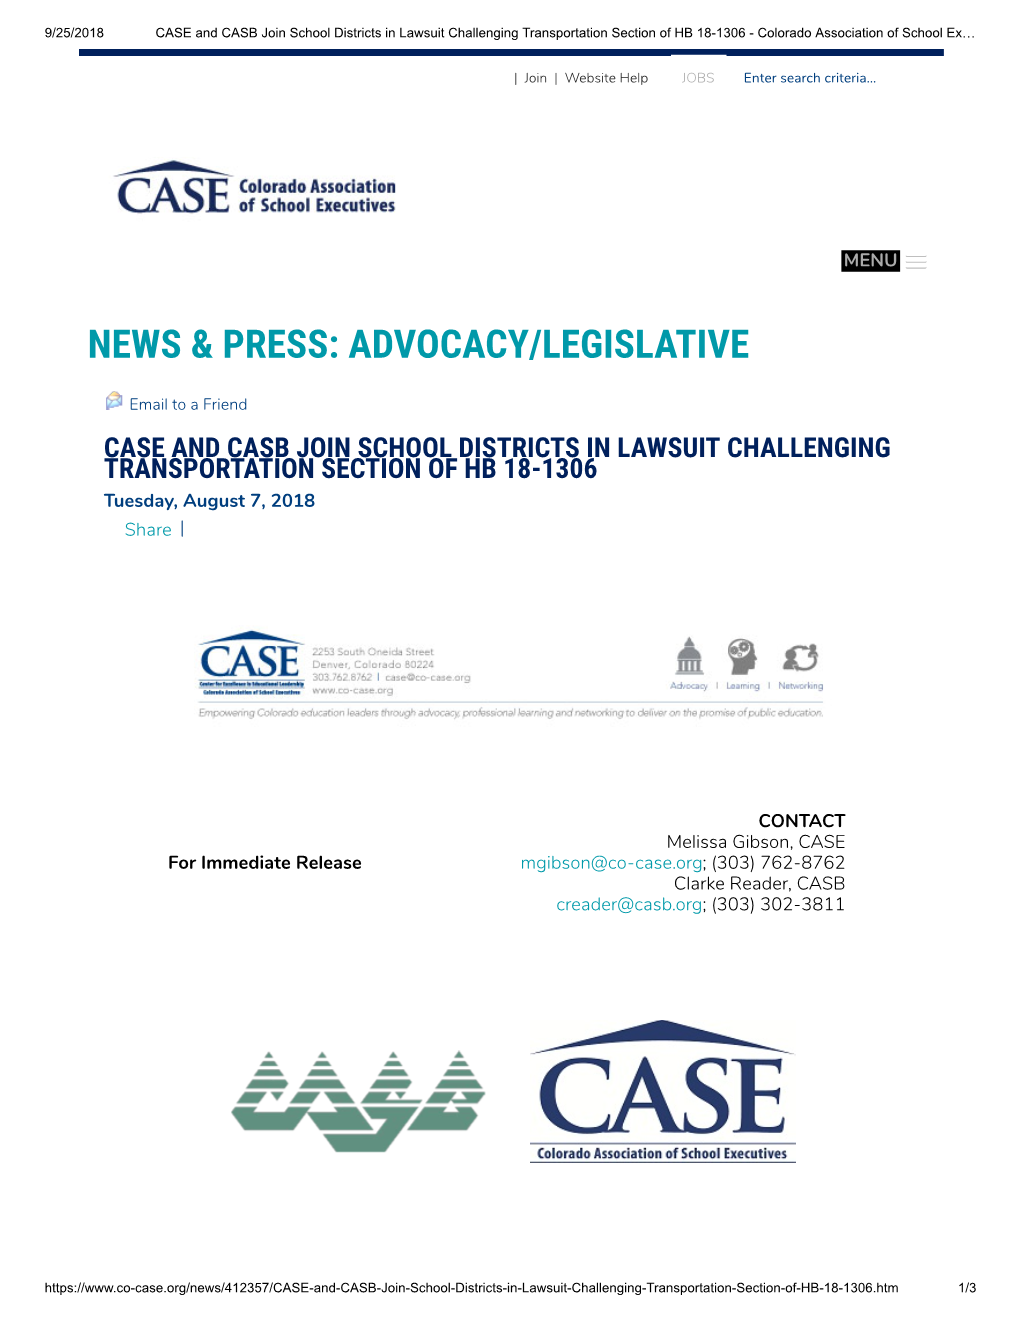 News & Press: Advocacy/Legislative Case and Casb Join School Districts